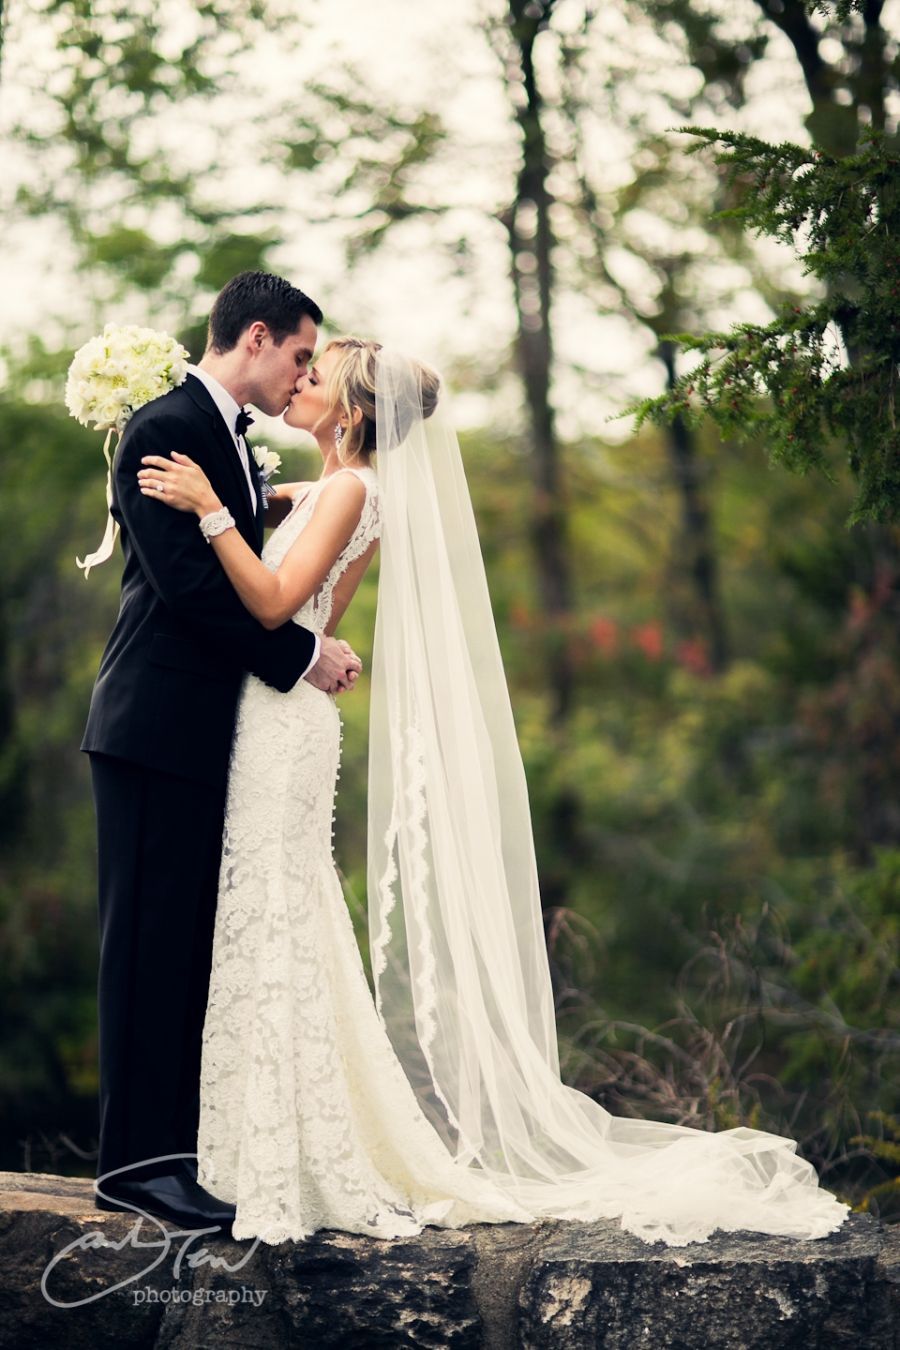 Great shot of long wedding veil on lace dress #weddingdress photo